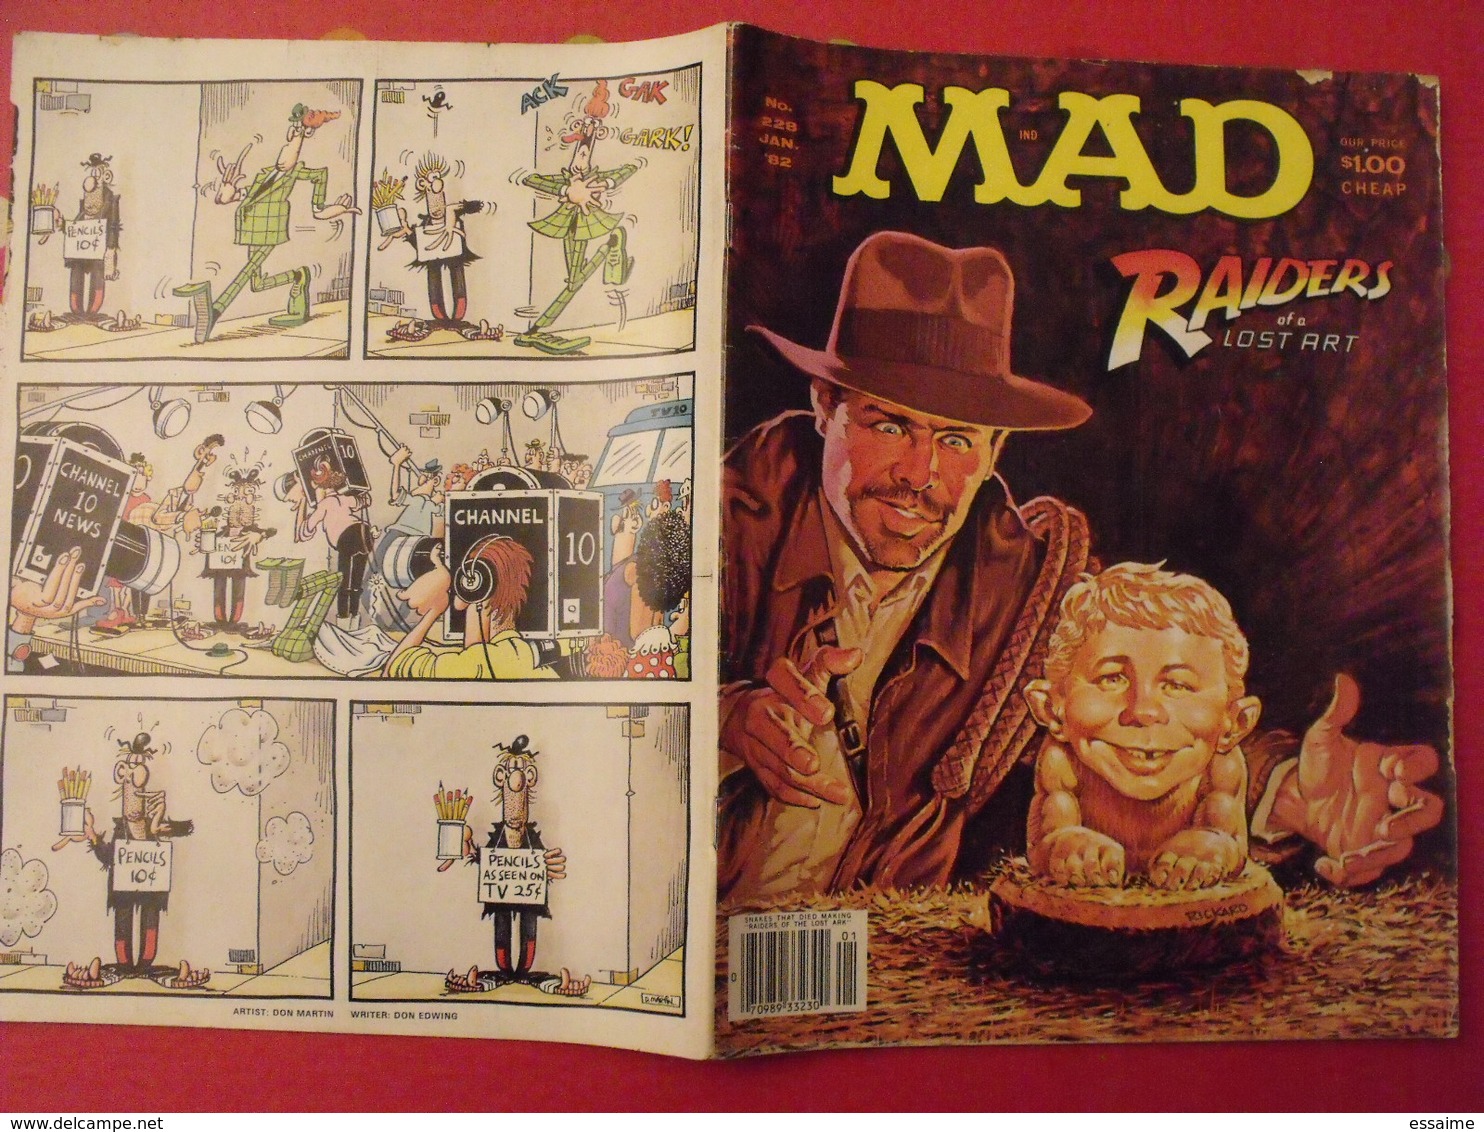 12 n° de MAD de 1980-1982. jack richard, don martin, david berg, jaffee. en anglais